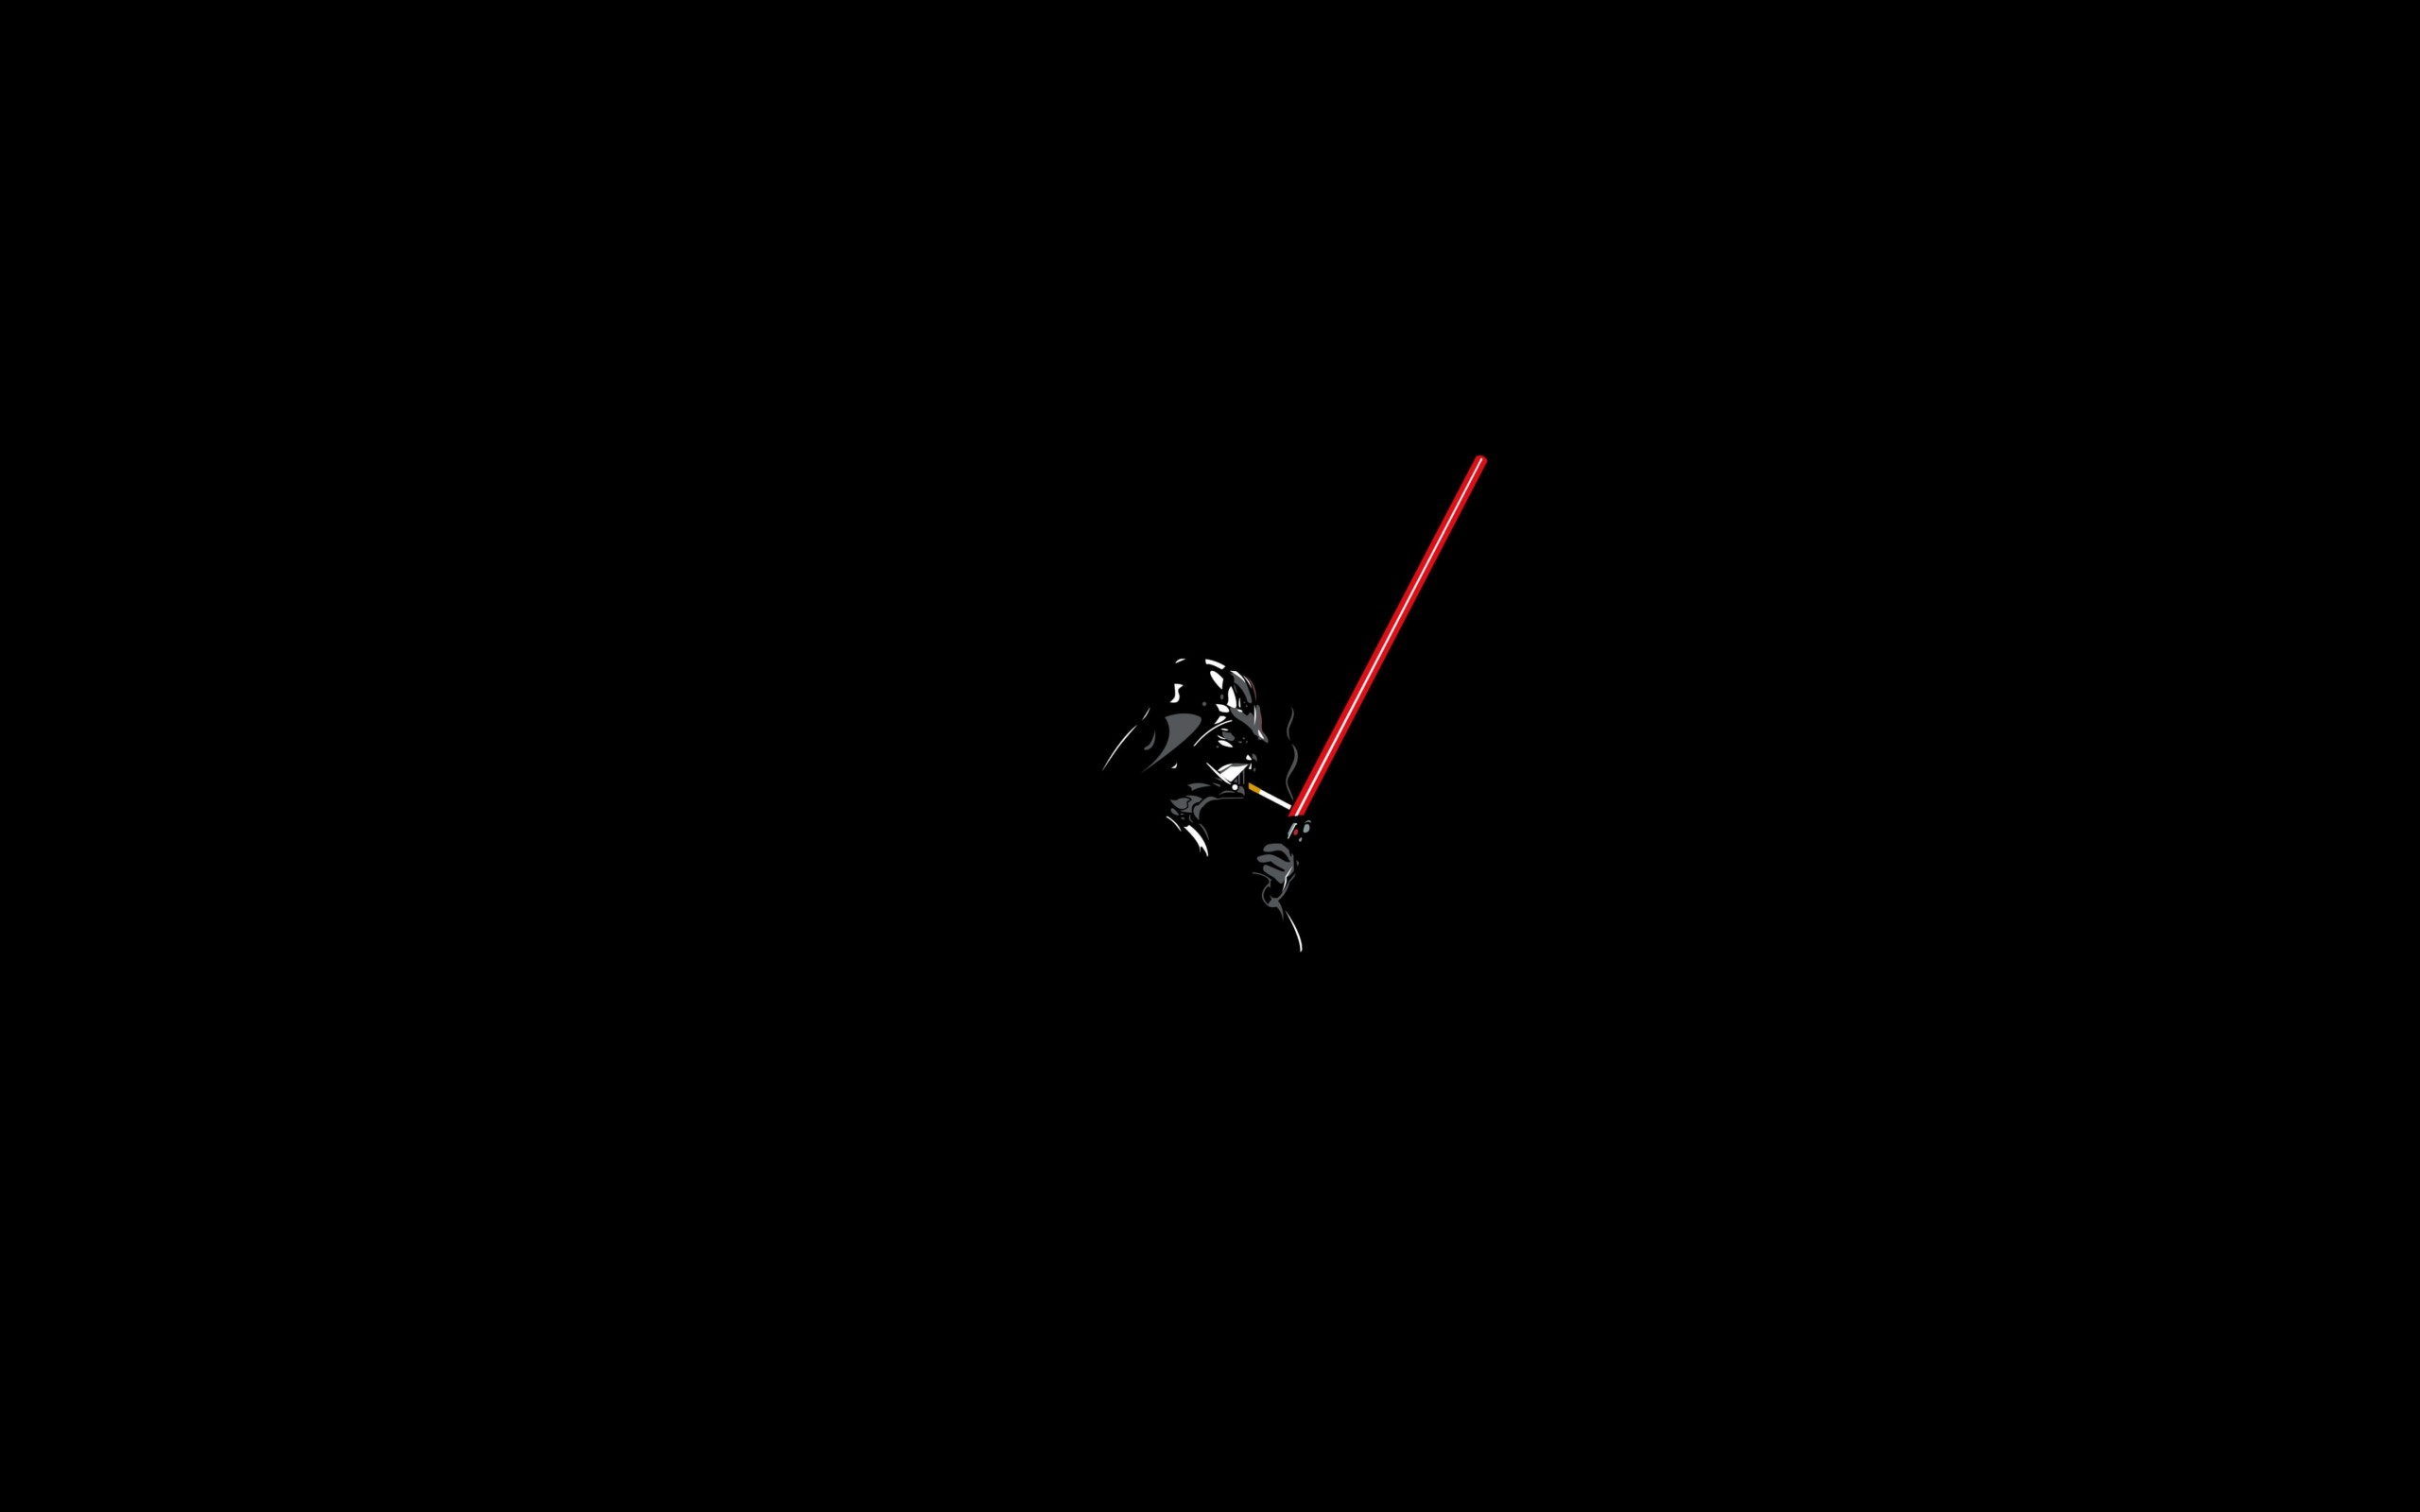 Darth Vader Lighting a Cigarette Wallpaper for Desktop 2560x1600